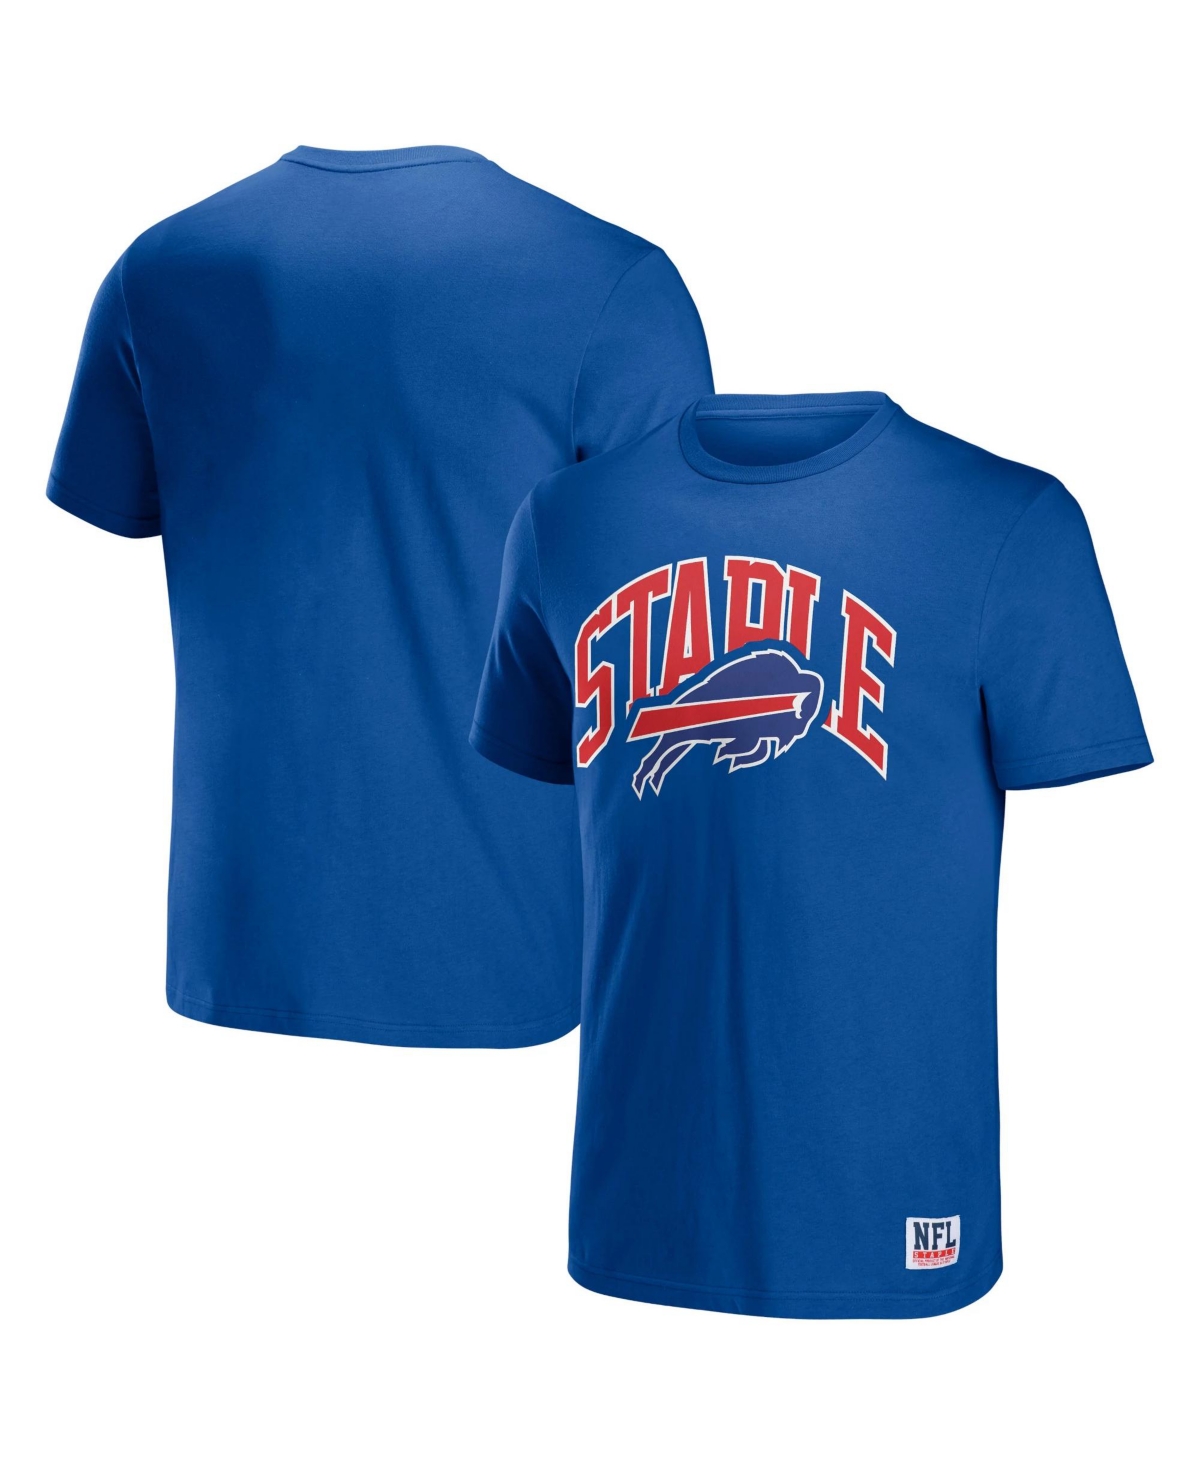 Men's Nfl X Staple Royal Buffalo Bills Lockup Logo Short Sleeve T-shirt - Royal